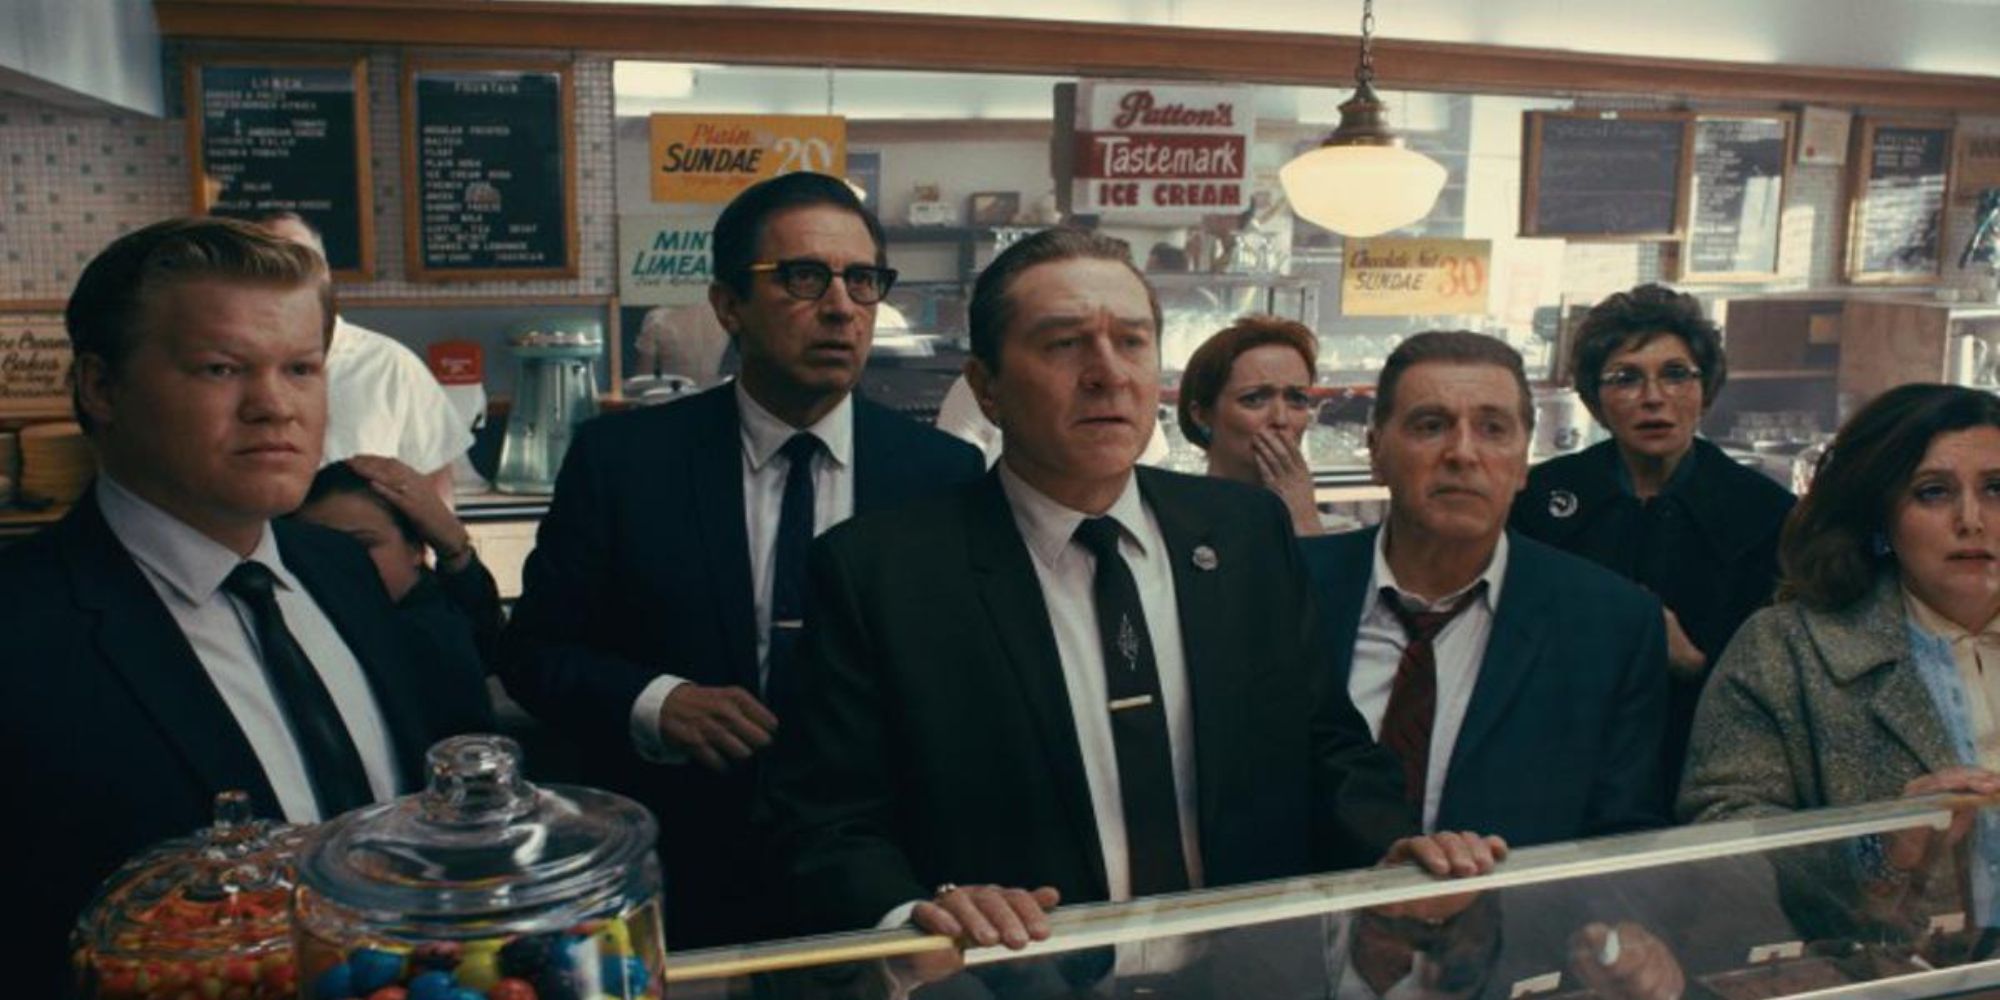 Jesse Plemmons, Ray Romano, Robert De Niro, and Al Pacino watching the TV in a store in The Irishman